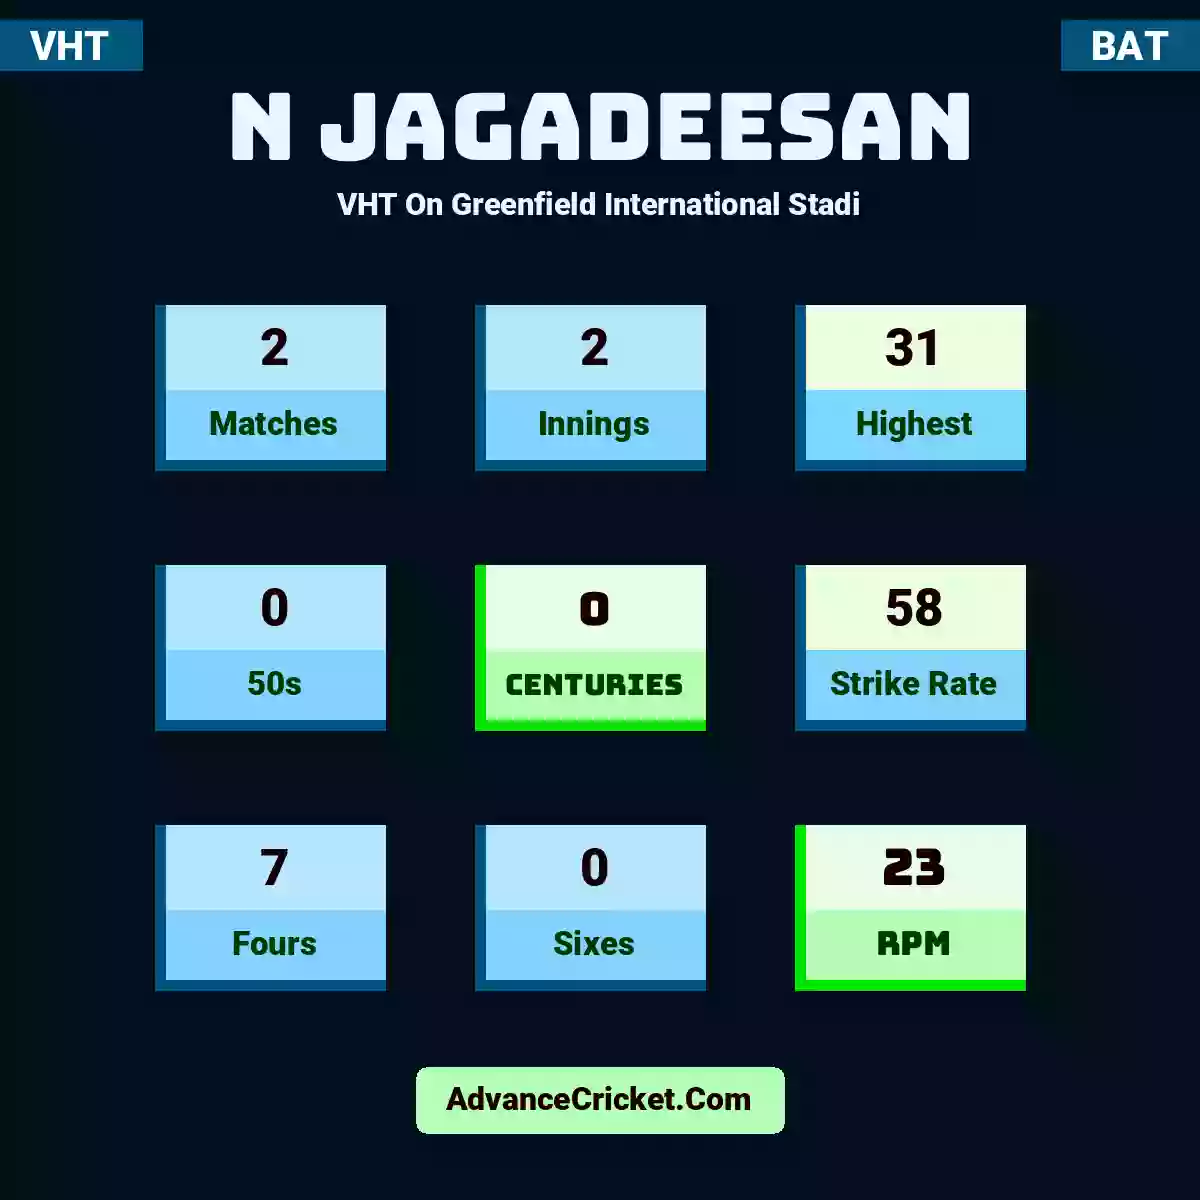 N Jagadeesan VHT  On Greenfield International Stadi, N Jagadeesan played 2 matches, scored 31 runs as highest, 0 half-centuries, and 0 centuries, with a strike rate of 58. N.Jagadeesan hit 7 fours and 0 sixes, with an RPM of 23.